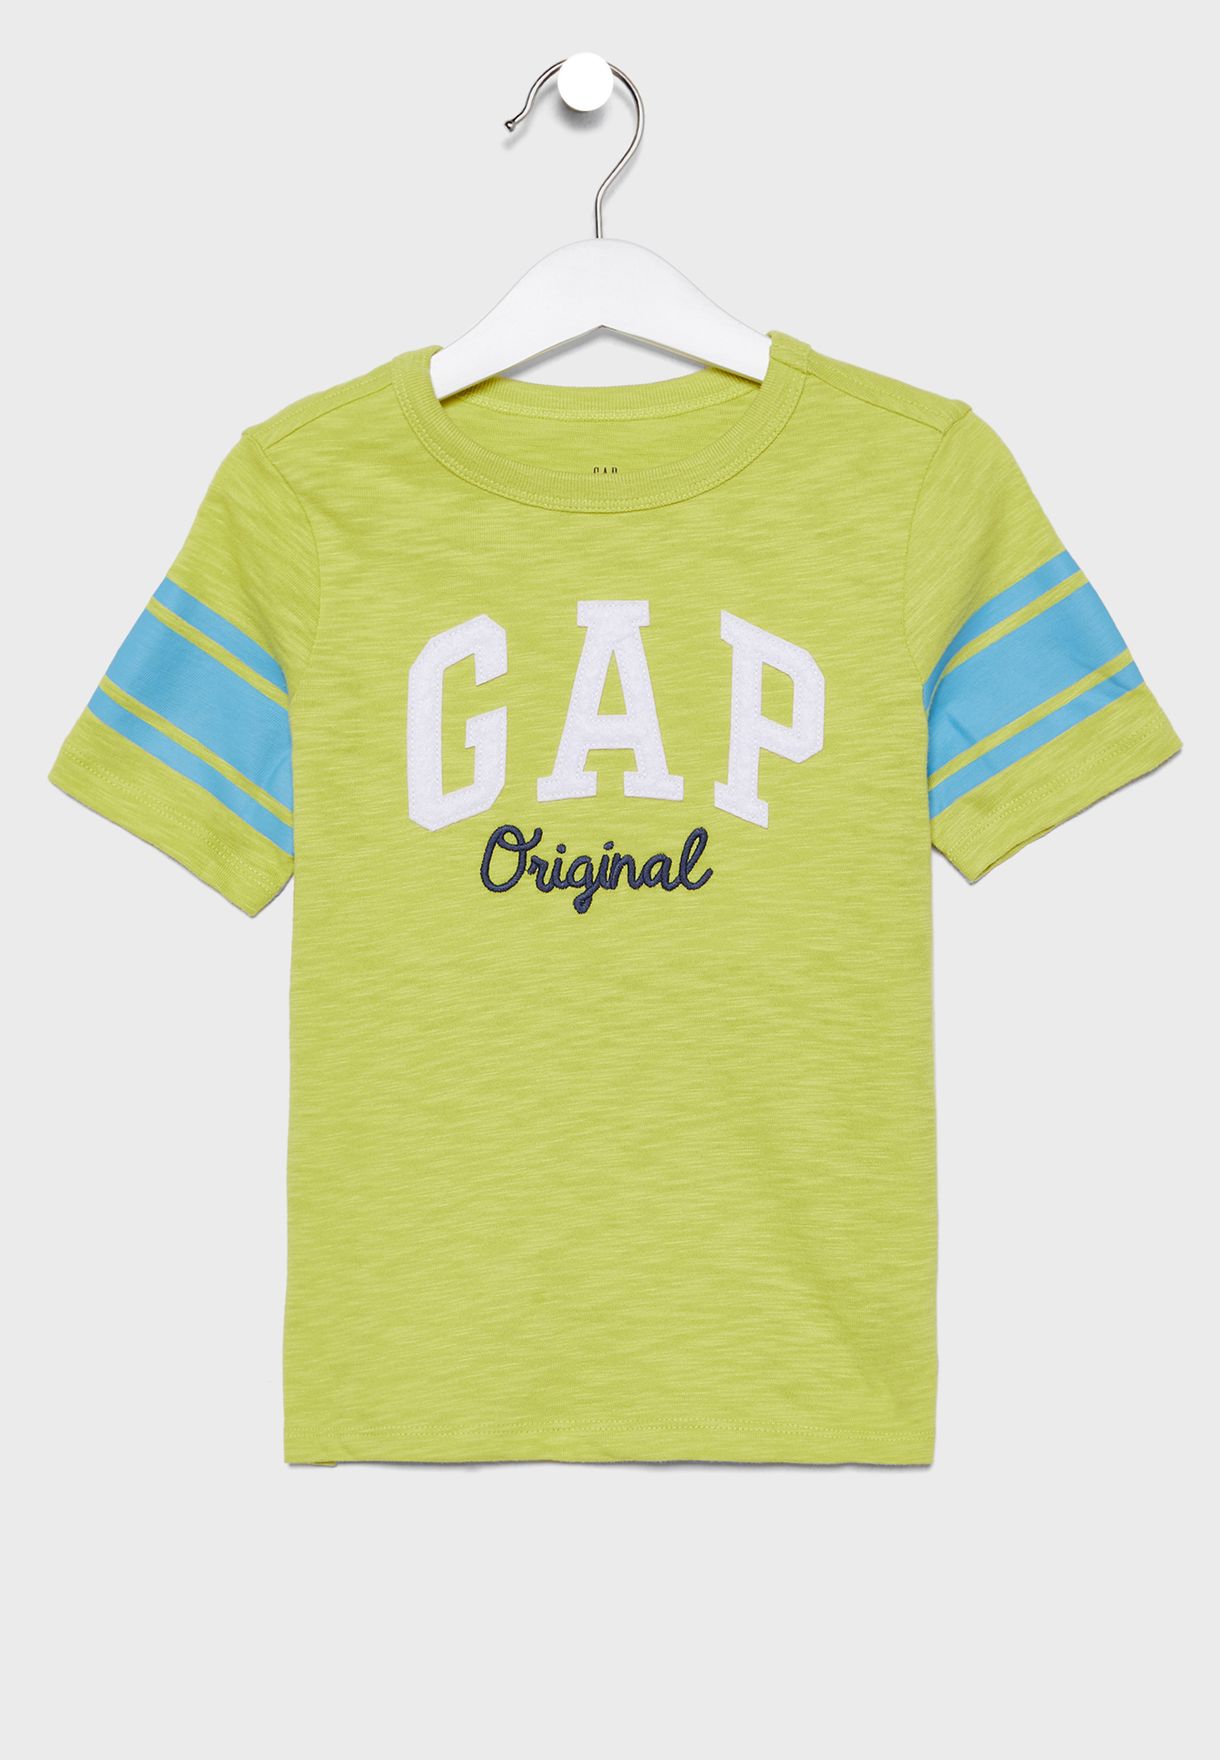 gap yellow shirt